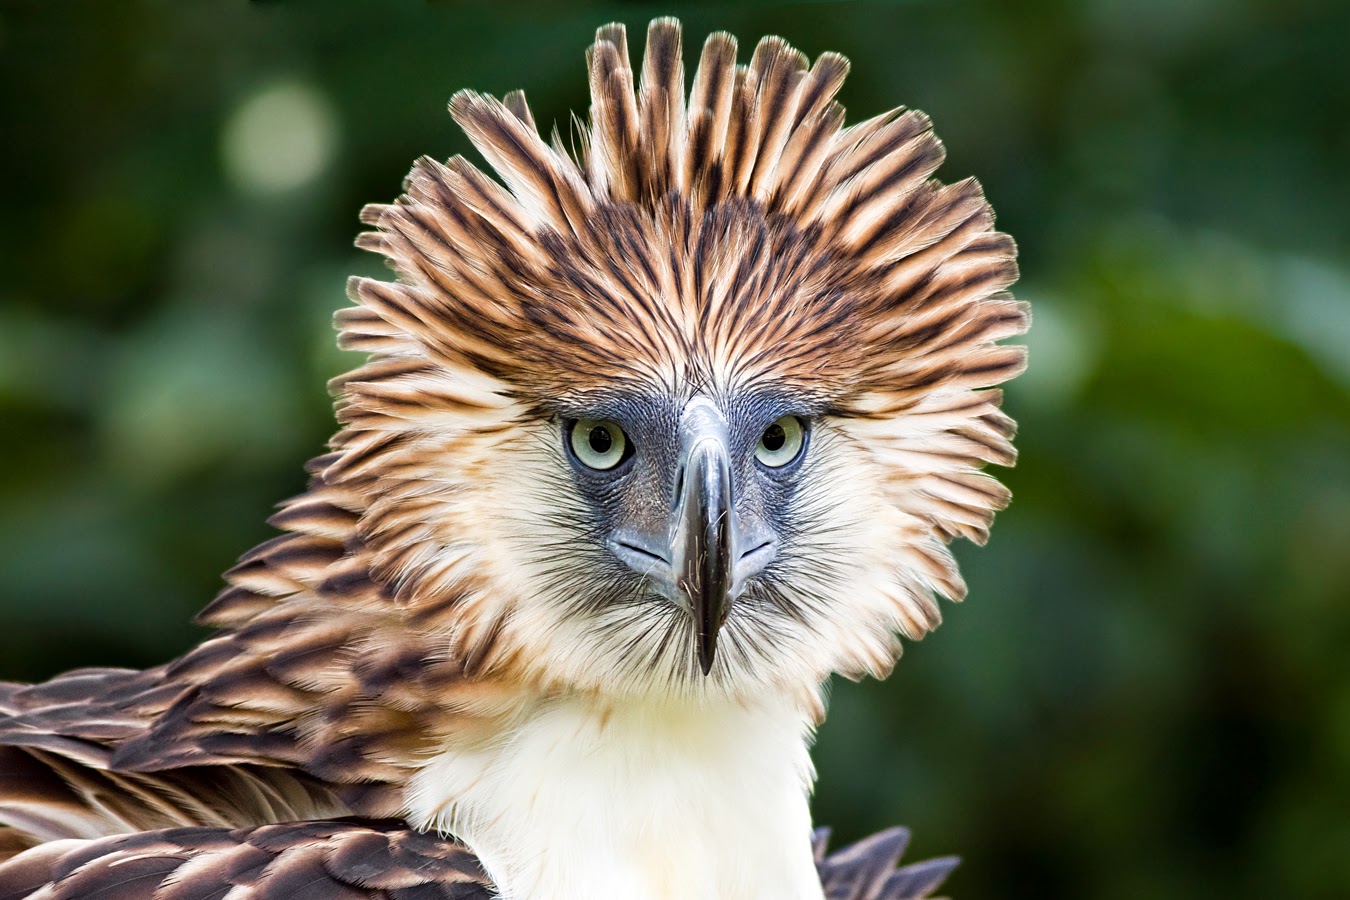 Descubre TU MUNDO Imágenes La espectacular águila filipina